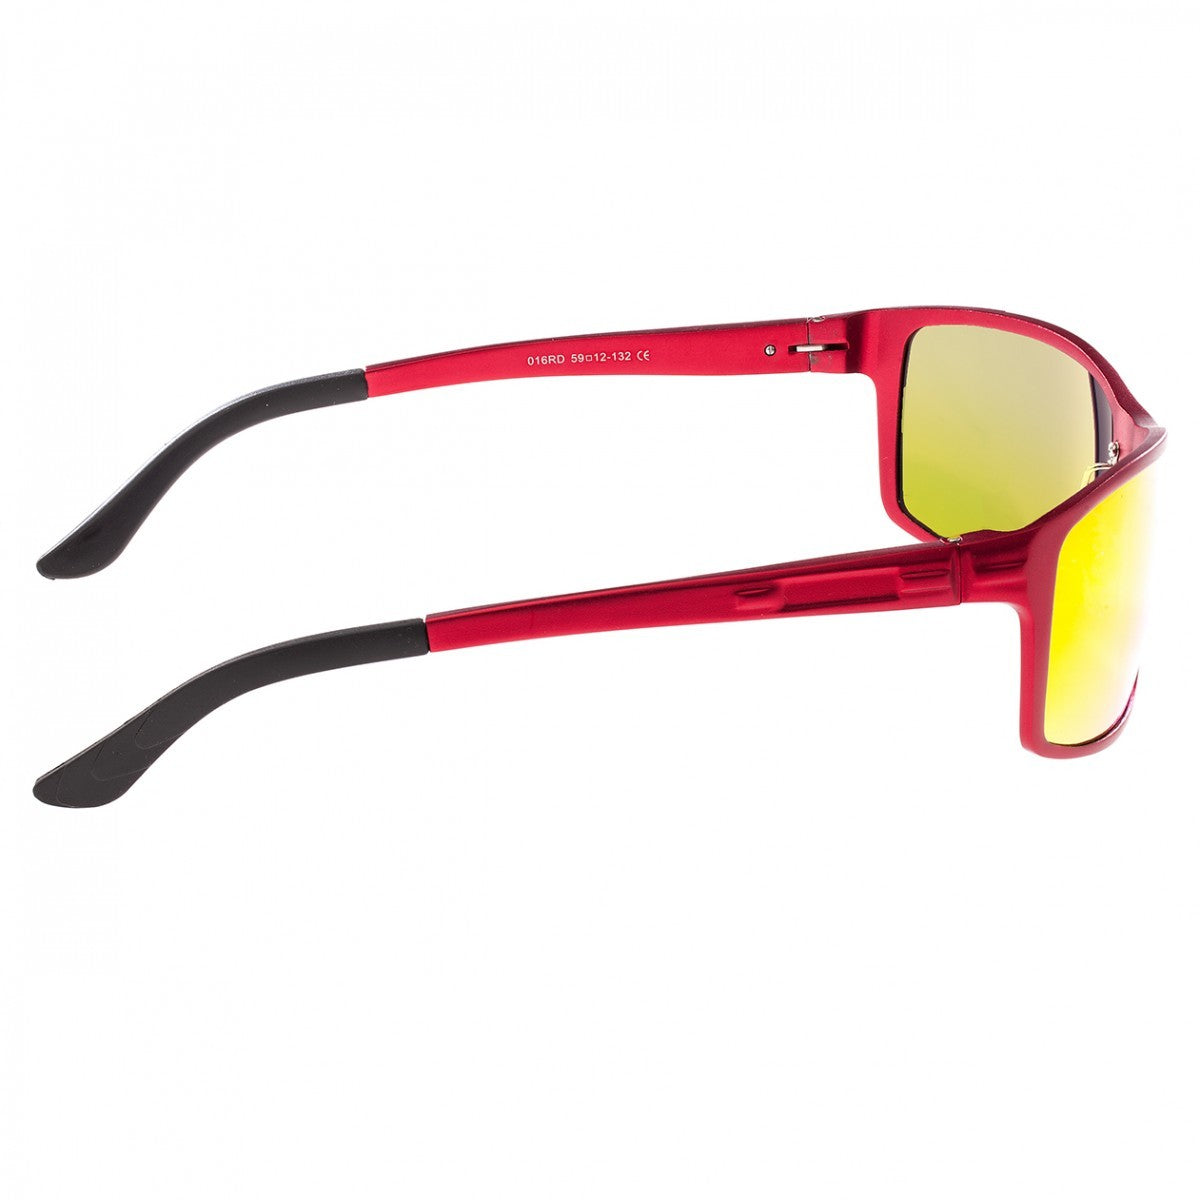 Breed Kaskade Aluminium Polarized Sunglasses - Red/Red-Yellow - BSG016RD